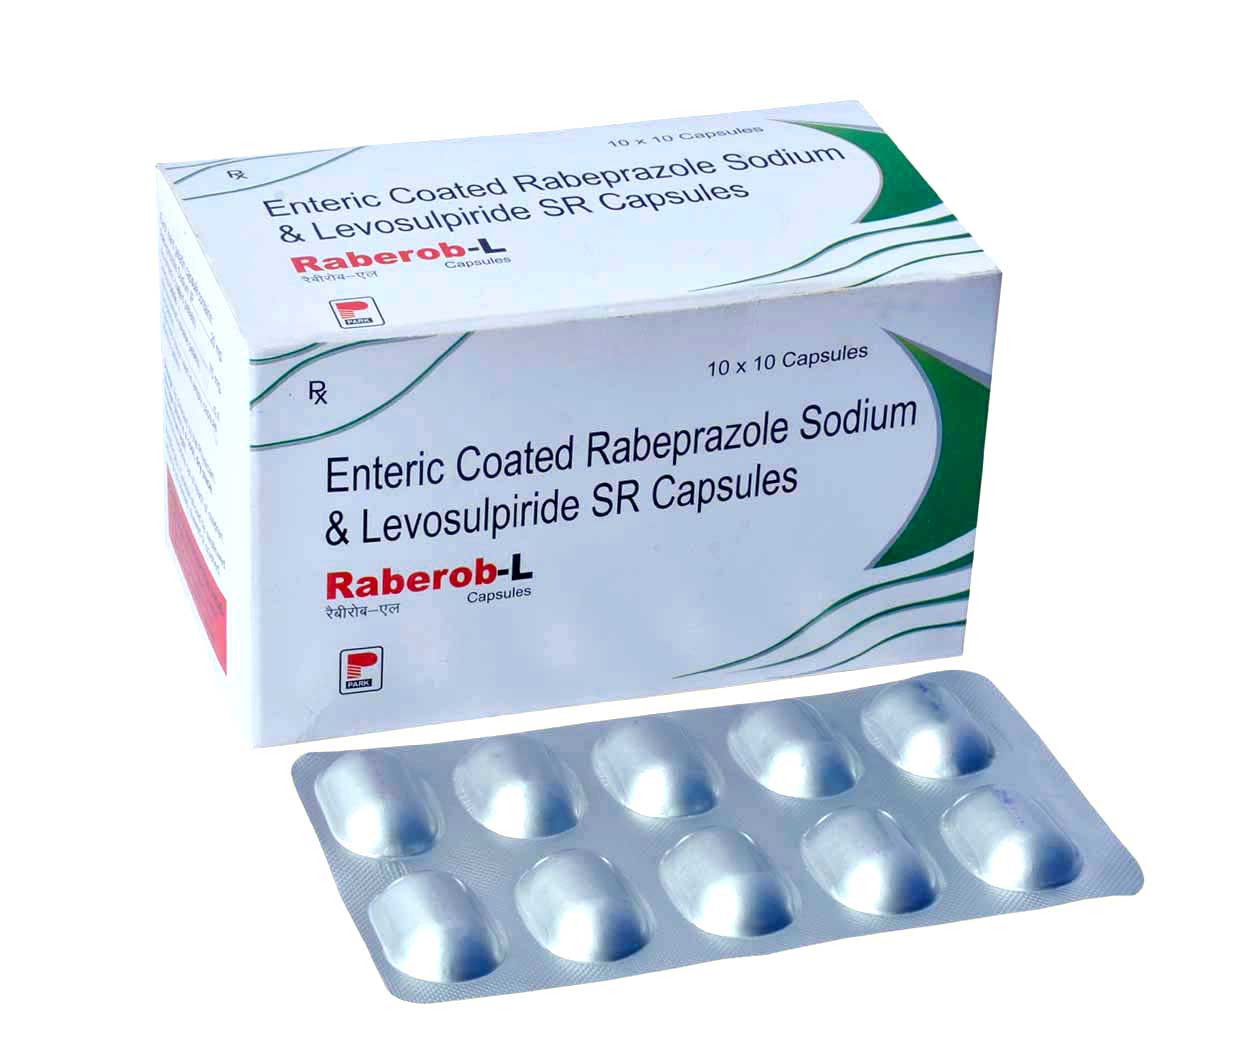 Product Name: Raberob L, Compositions of Raberob L are Enteric Coated Rabeprazole Sodium & Levosulpiride SR Capsules - Park Pharmaceuticals